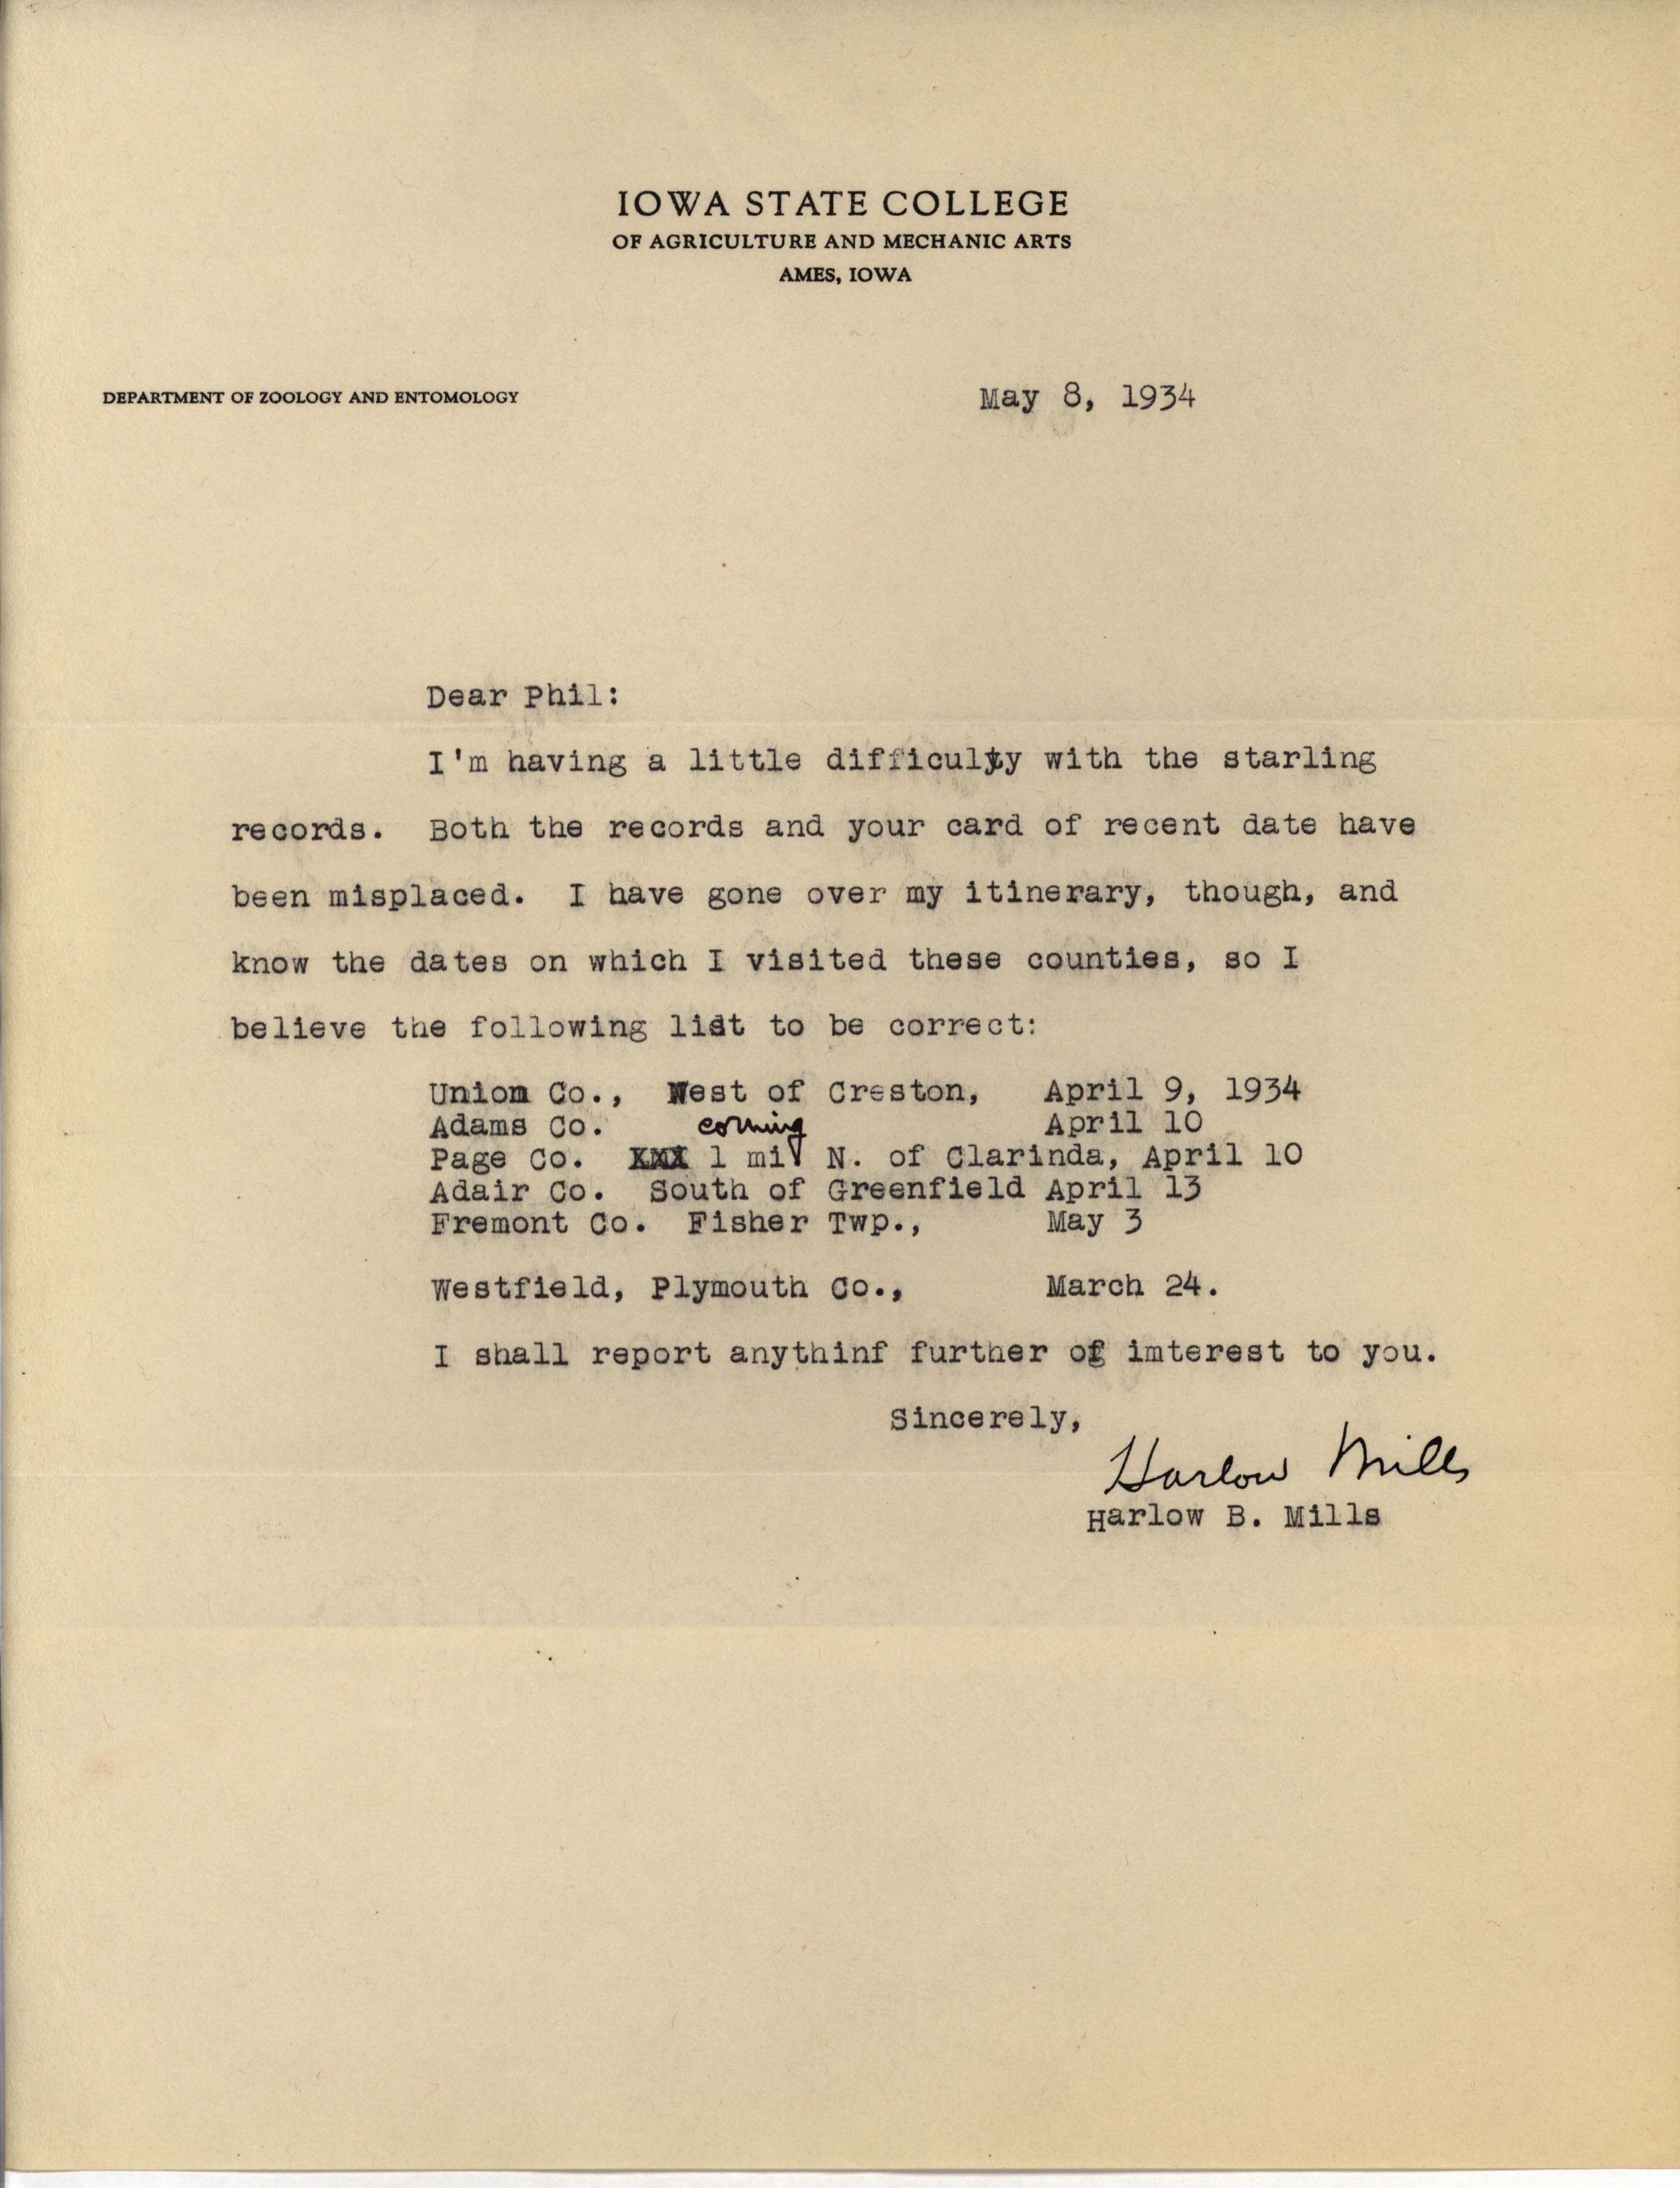 Harlow Mills letter to Philip DuMont regarding Starling sightings, May 8, 1934